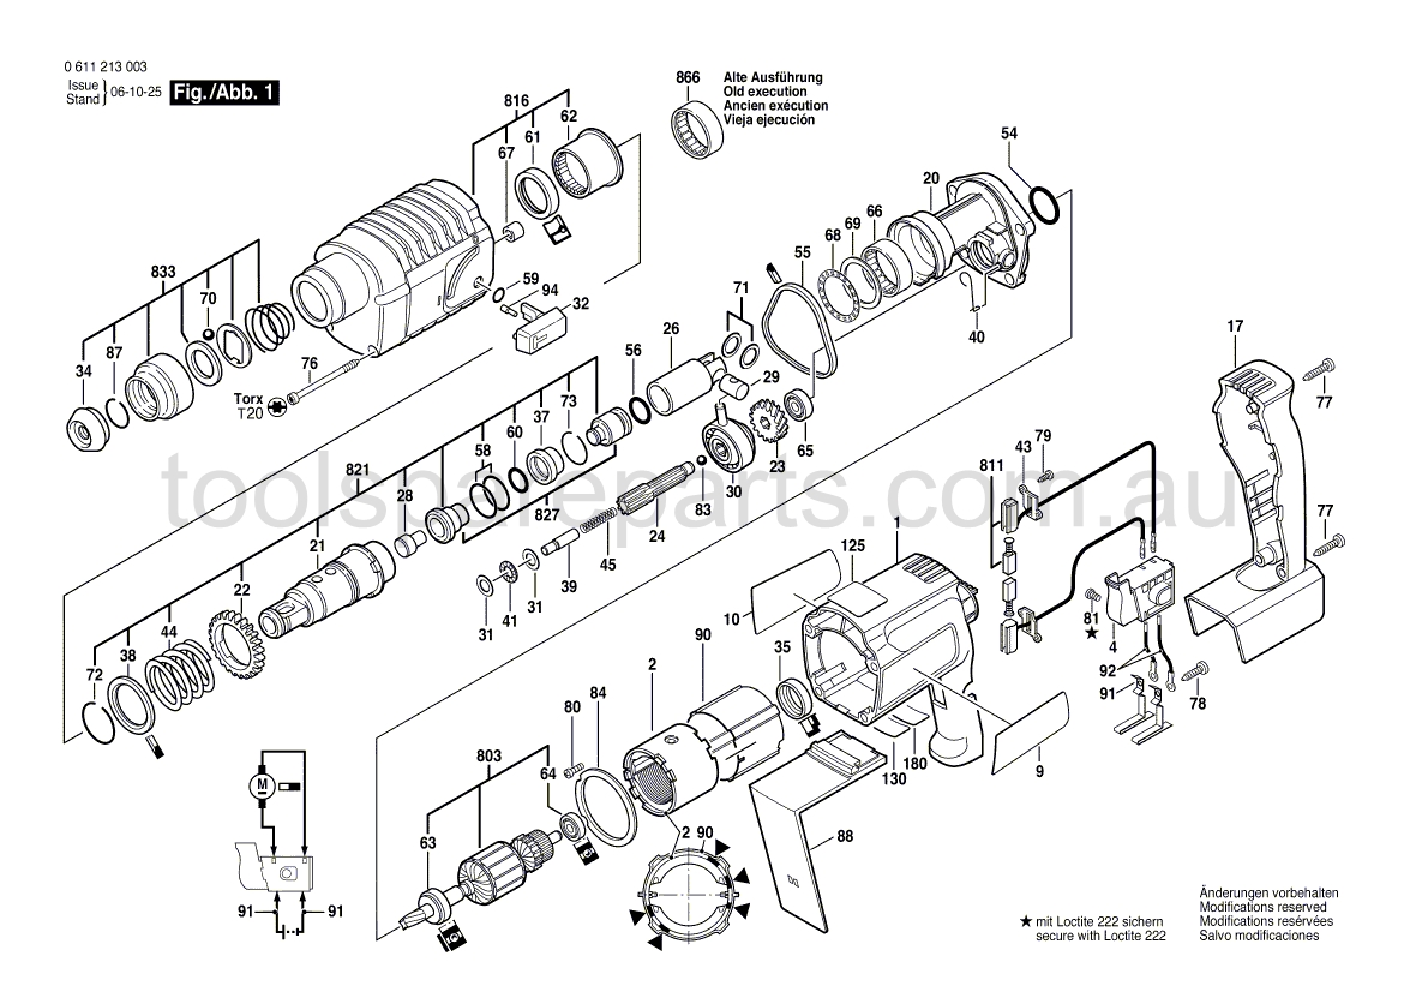 Bosch GBH 24 V 0611213037  Diagram 1